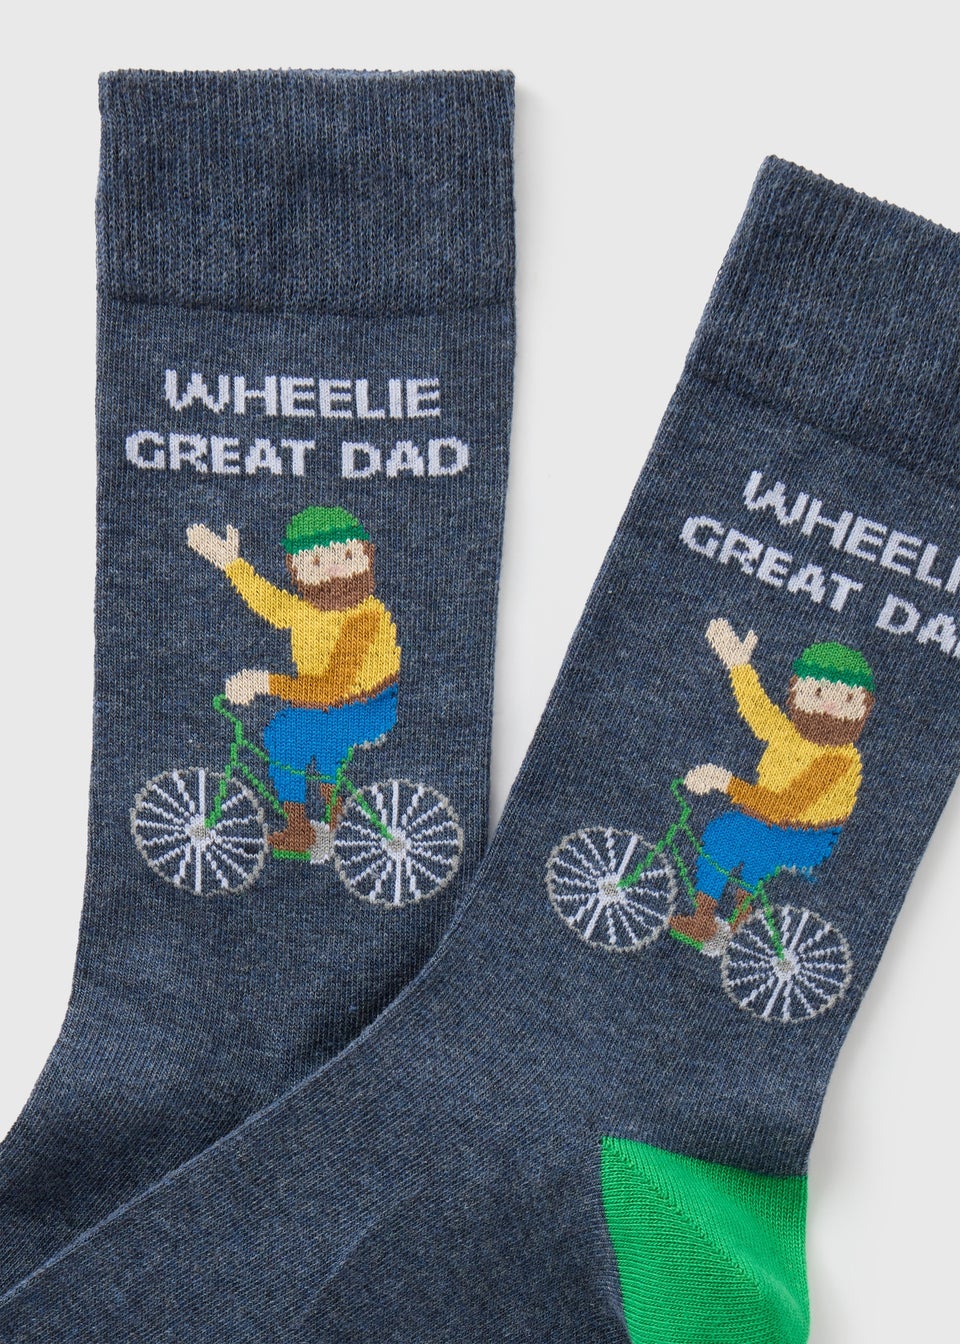 Grey 'Great Dad' socks